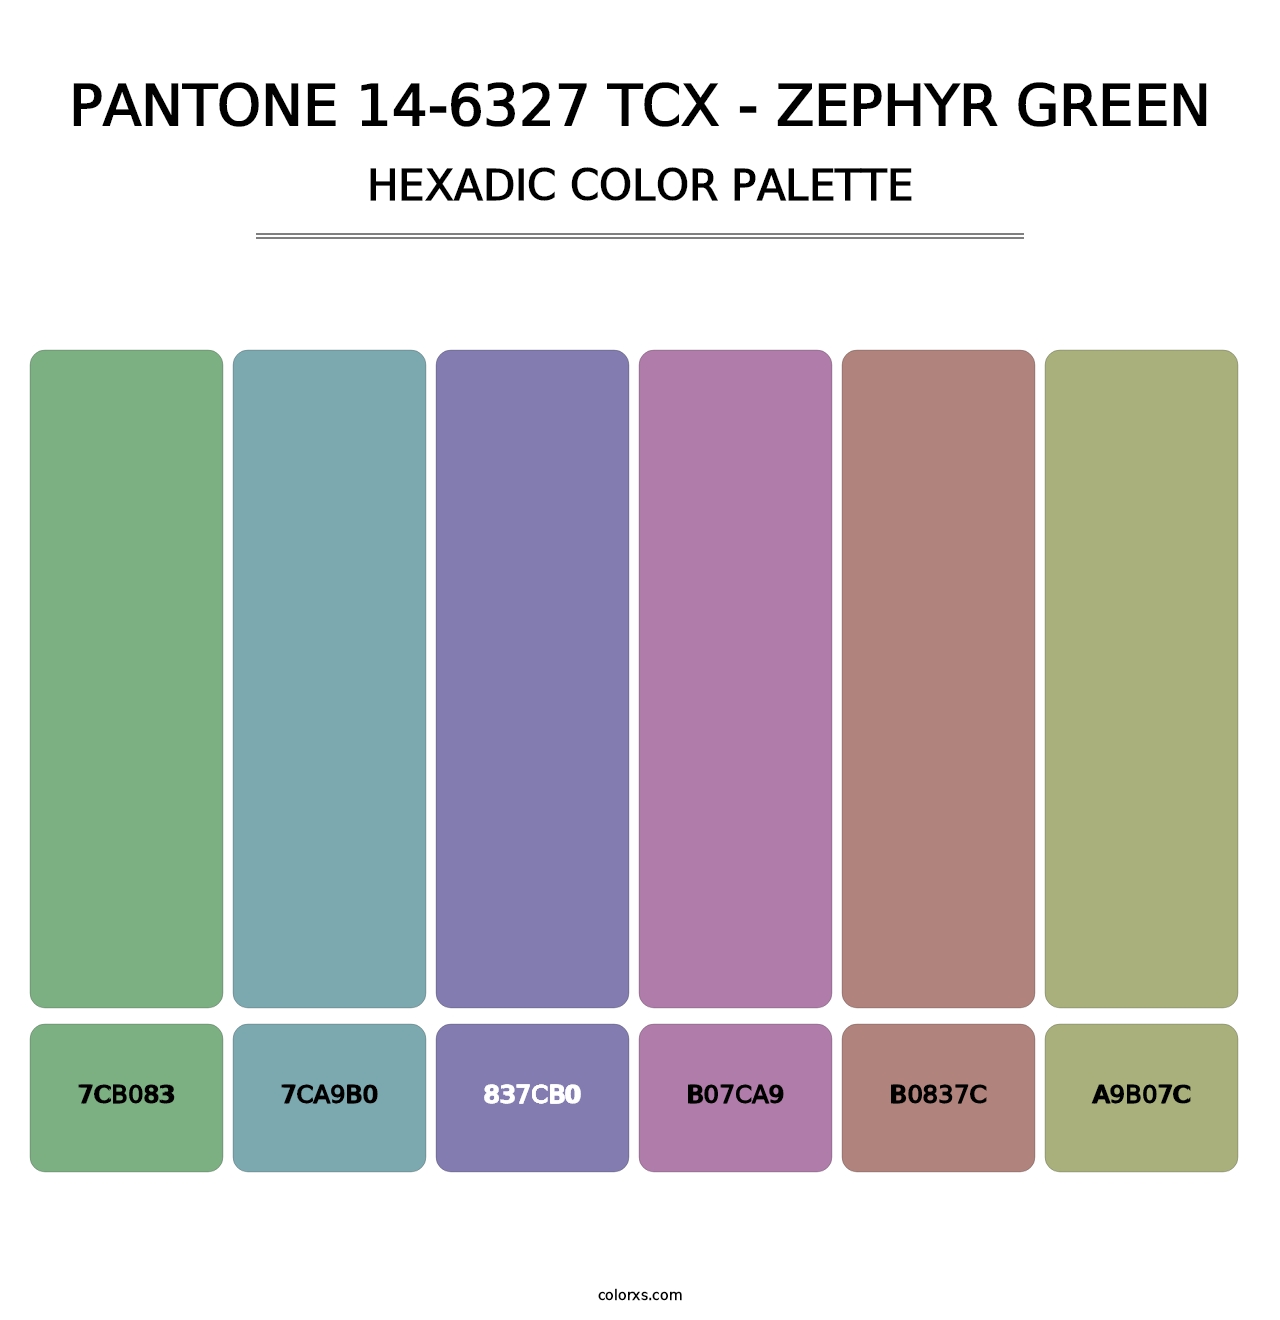 PANTONE 14-6327 TCX - Zephyr Green - Hexadic Color Palette